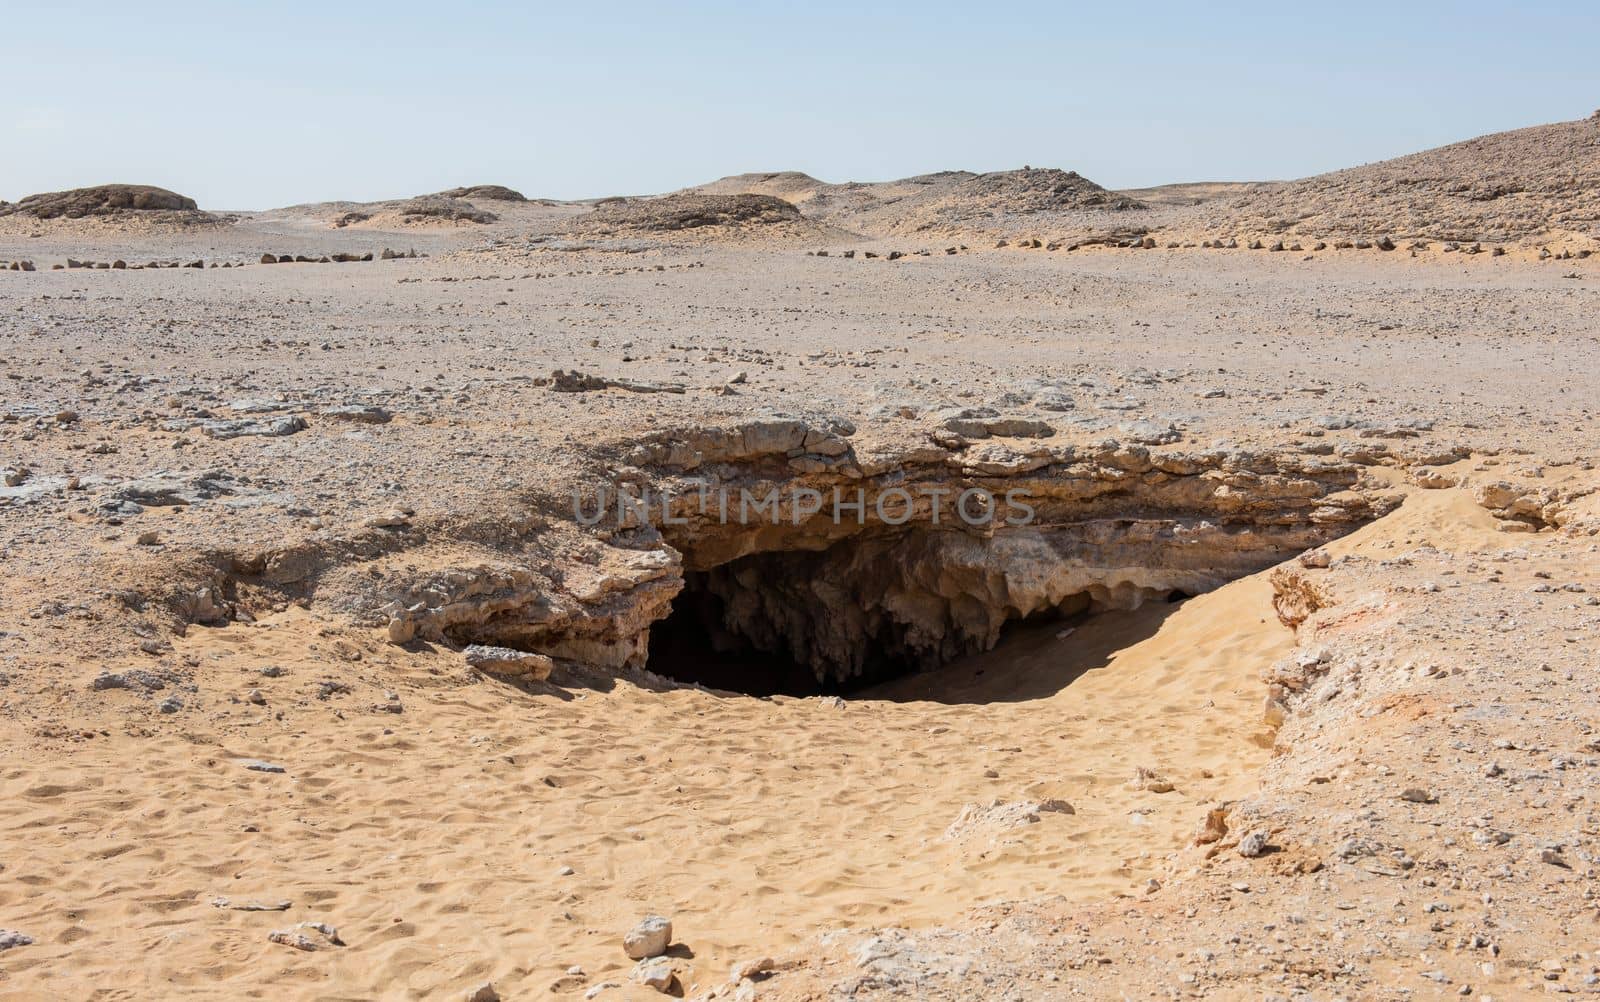 Barren rocky desert landscape in hot climate with cave entrance by paulvinten